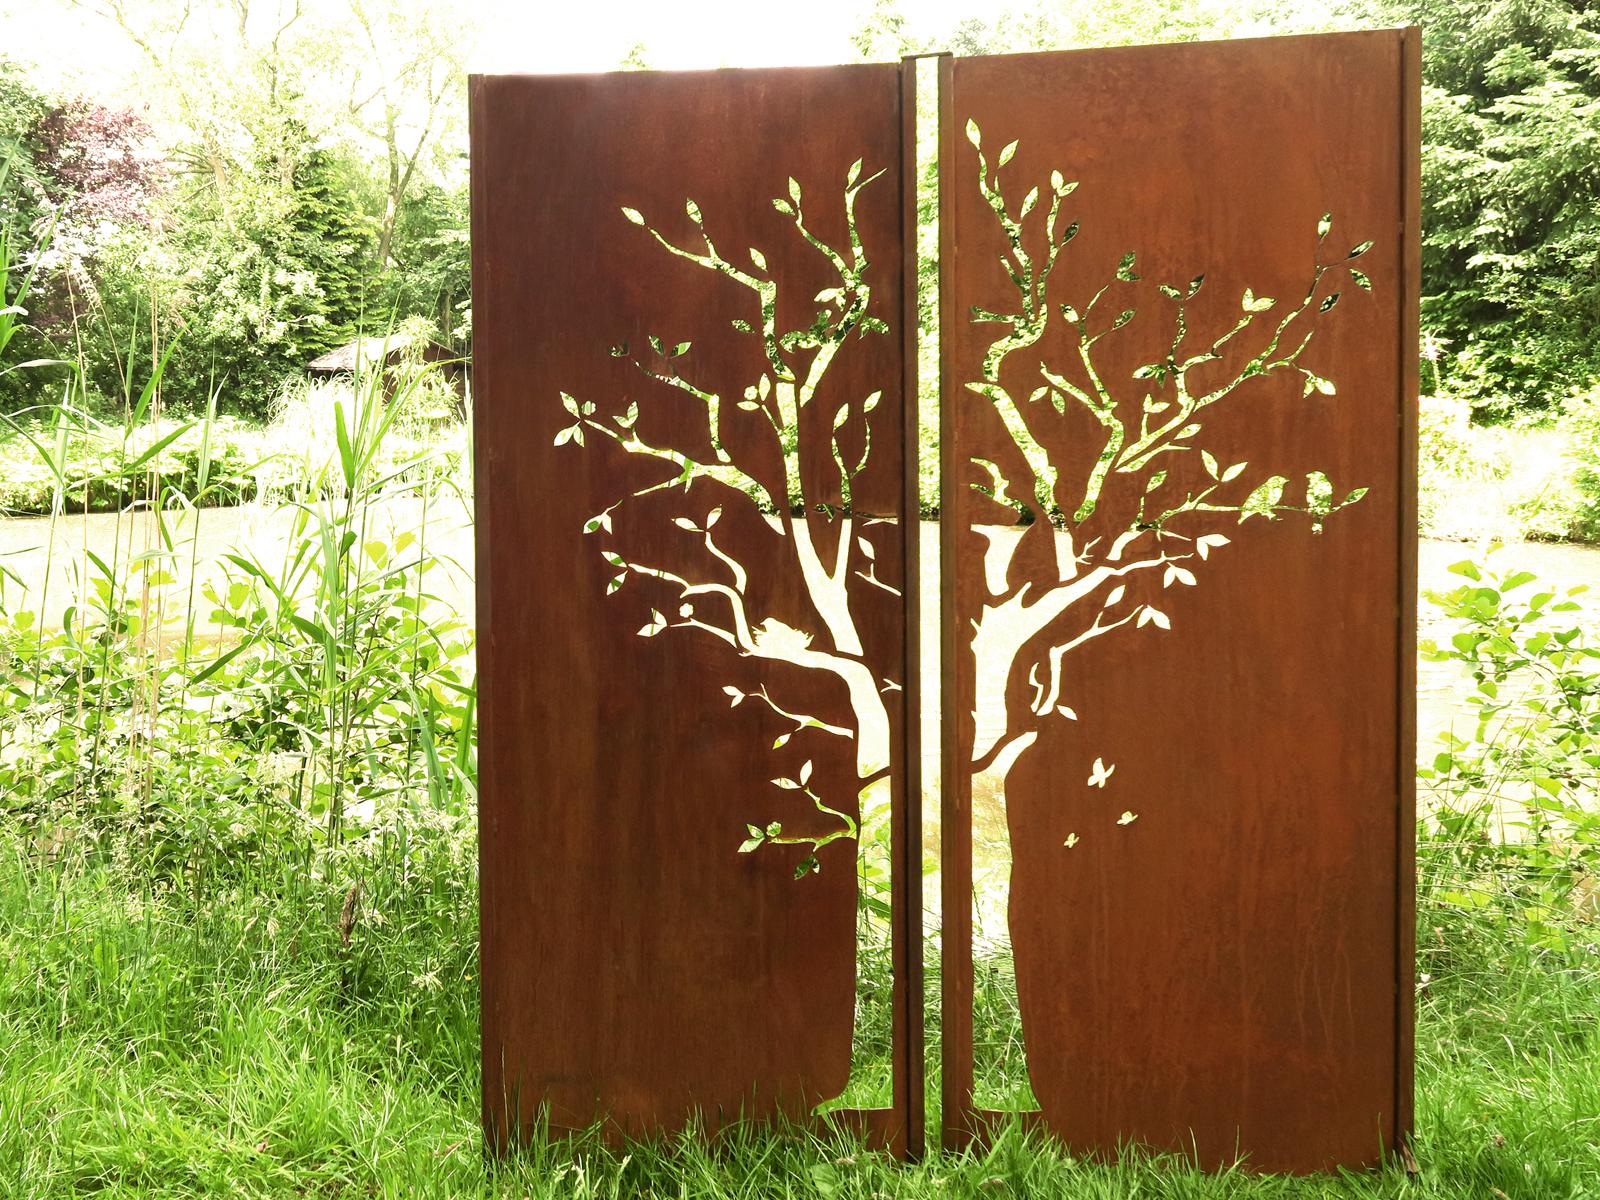 Steel Garden Wall - "Diptych Tree" - Modern Outdoor Ornament - 150 x 195 cm - Mixed Media Art by Stefan Traloc